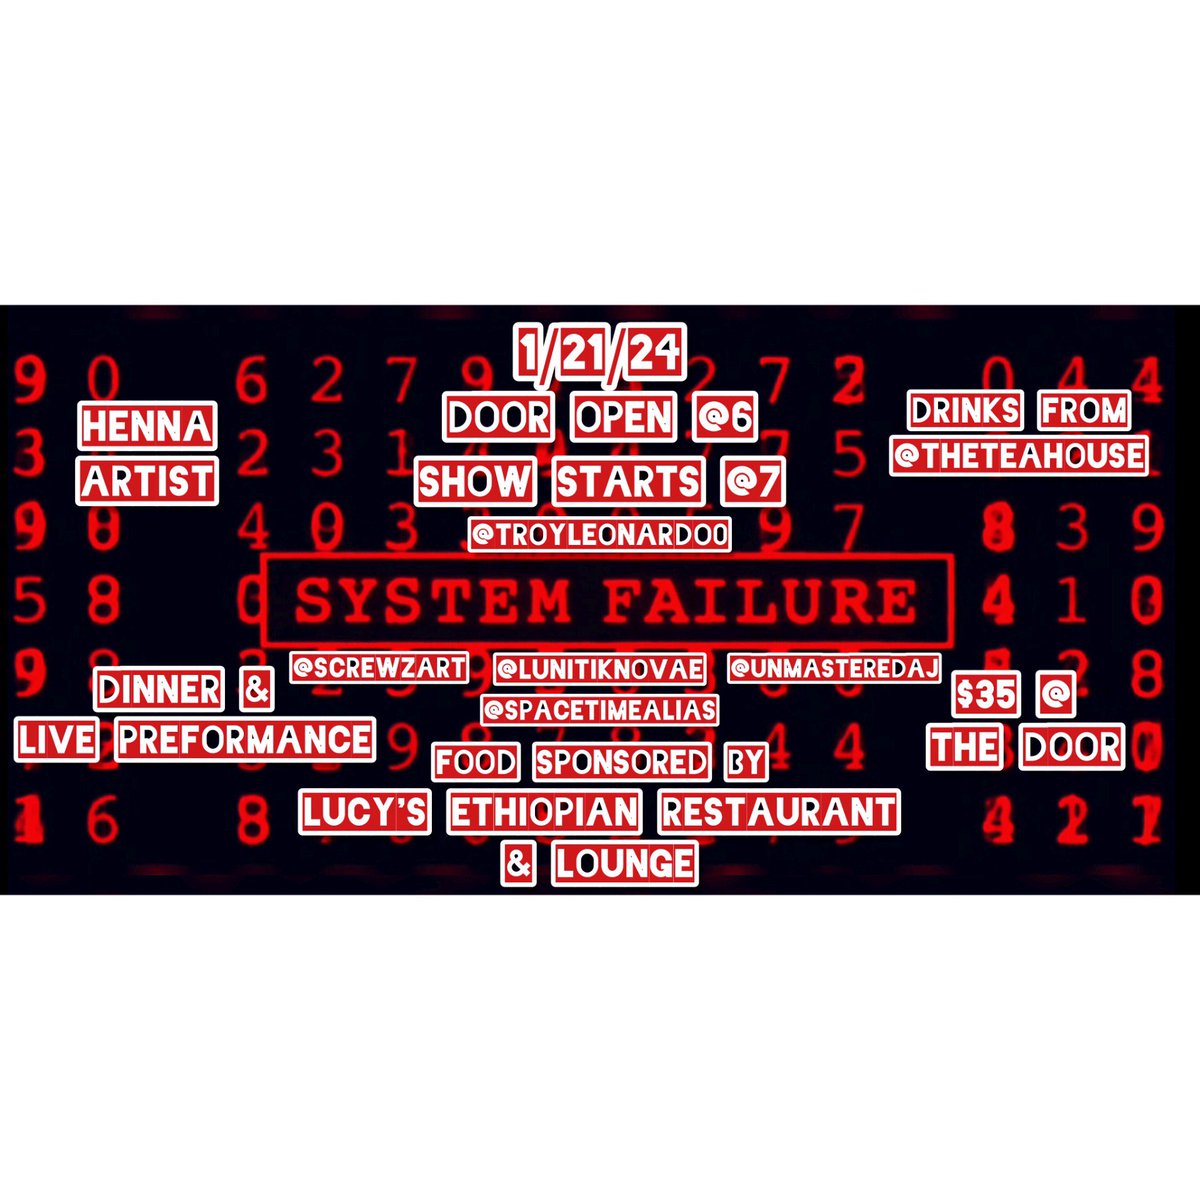 #SystemFailure 
🐇 
2morrow!